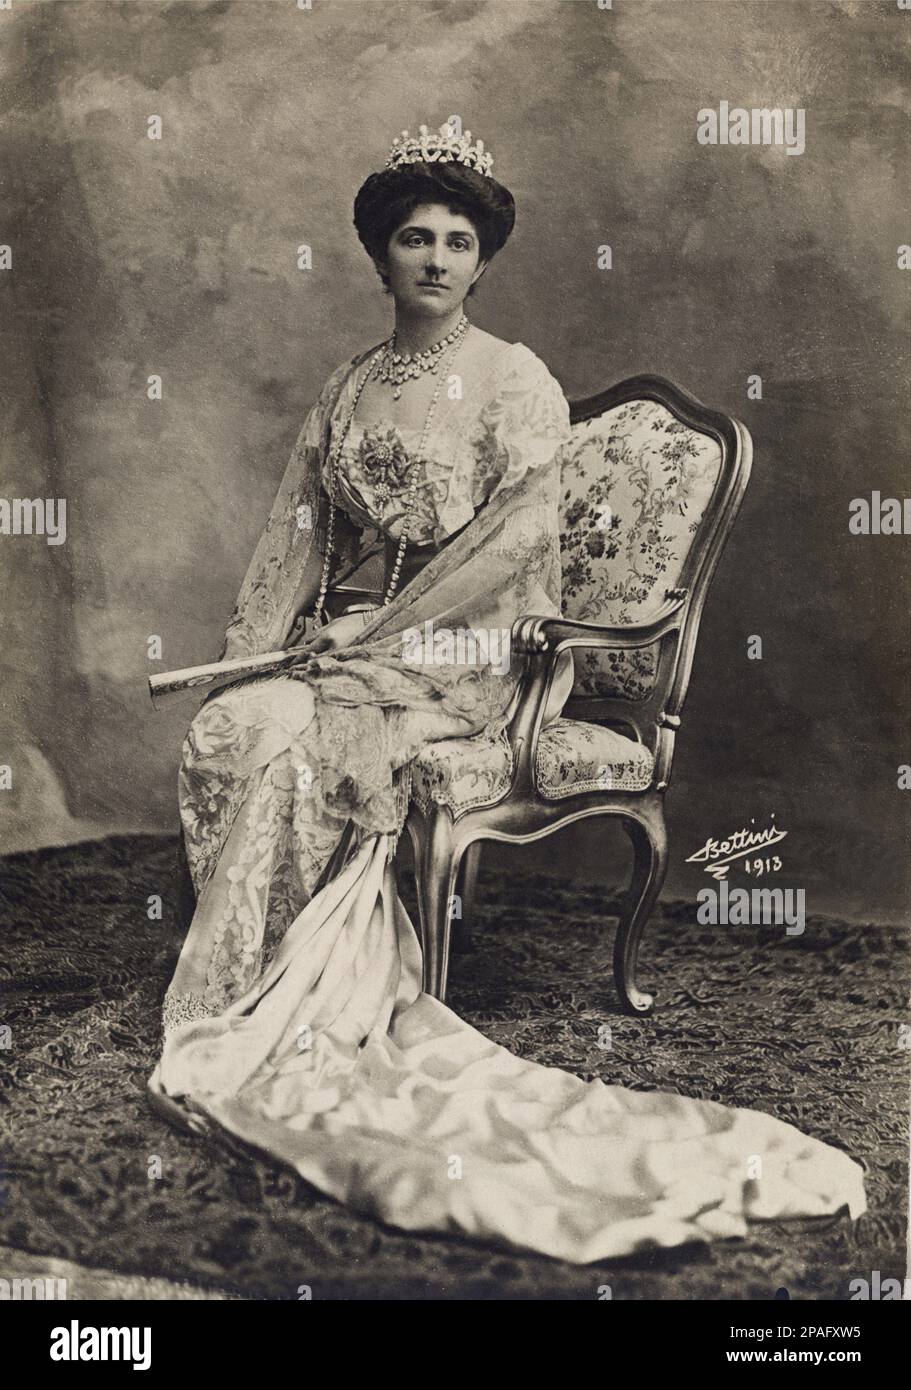 1913 , Roma, Italien : die Königin von Italien ELENA ( Helene von Montenegro , 1873 - 1952 ) im offiziellen Porträt des Fotografen Bettini , Roma . - CASA SAVOIA - ITALIA - REALI - Nobiltà ITALIANA - ADEL - ADEL - GESCHICHTE - FOTO STORICHE - gioiello - gioielli - Juwelen - Schmuck - collana di diamanti - Diamante - Diamantenhalskette - Diamant - Corona - Diadema - Krone - Tiara - Scollatura - Nekkopening - Halslinie - Decollete' - Diamante - diamant - pizzo - Spitze - spilla - Pin - BELLE EPOQUE - Handschuhe - Guanto - Guanti - Chignon ---- ARCHIVIO GBB Stockfoto